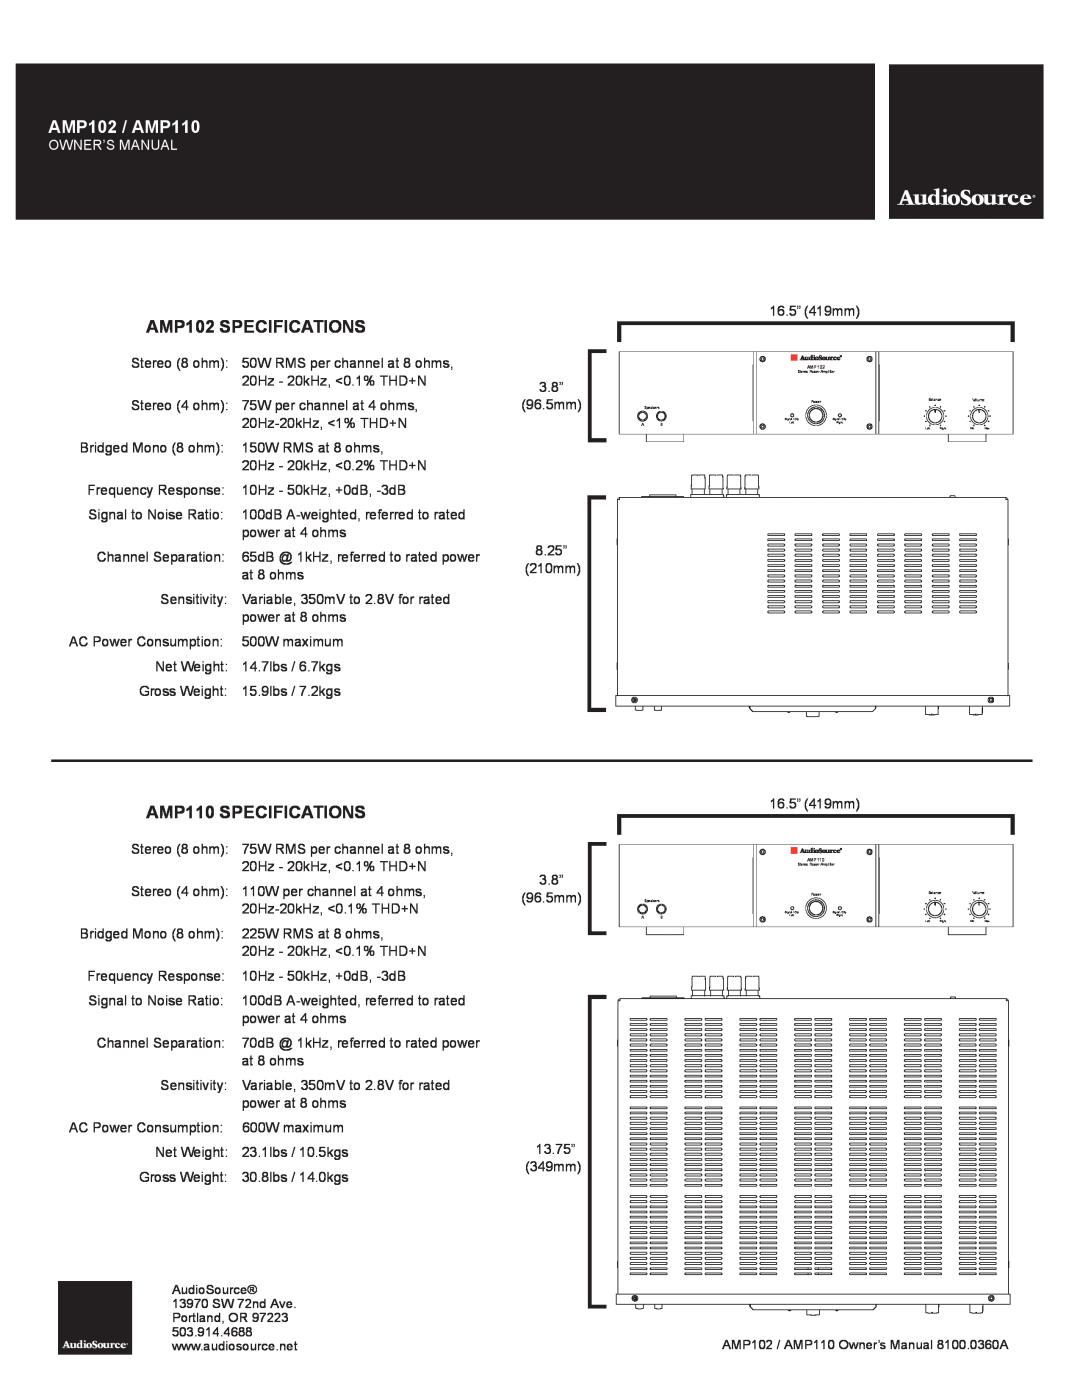 AudioSource Home Audio Multi-Zone Power Amplier AMP102 / AMP110, AMP102 SPECIFICATIONS, AMP110 SPECIFICATIONS 